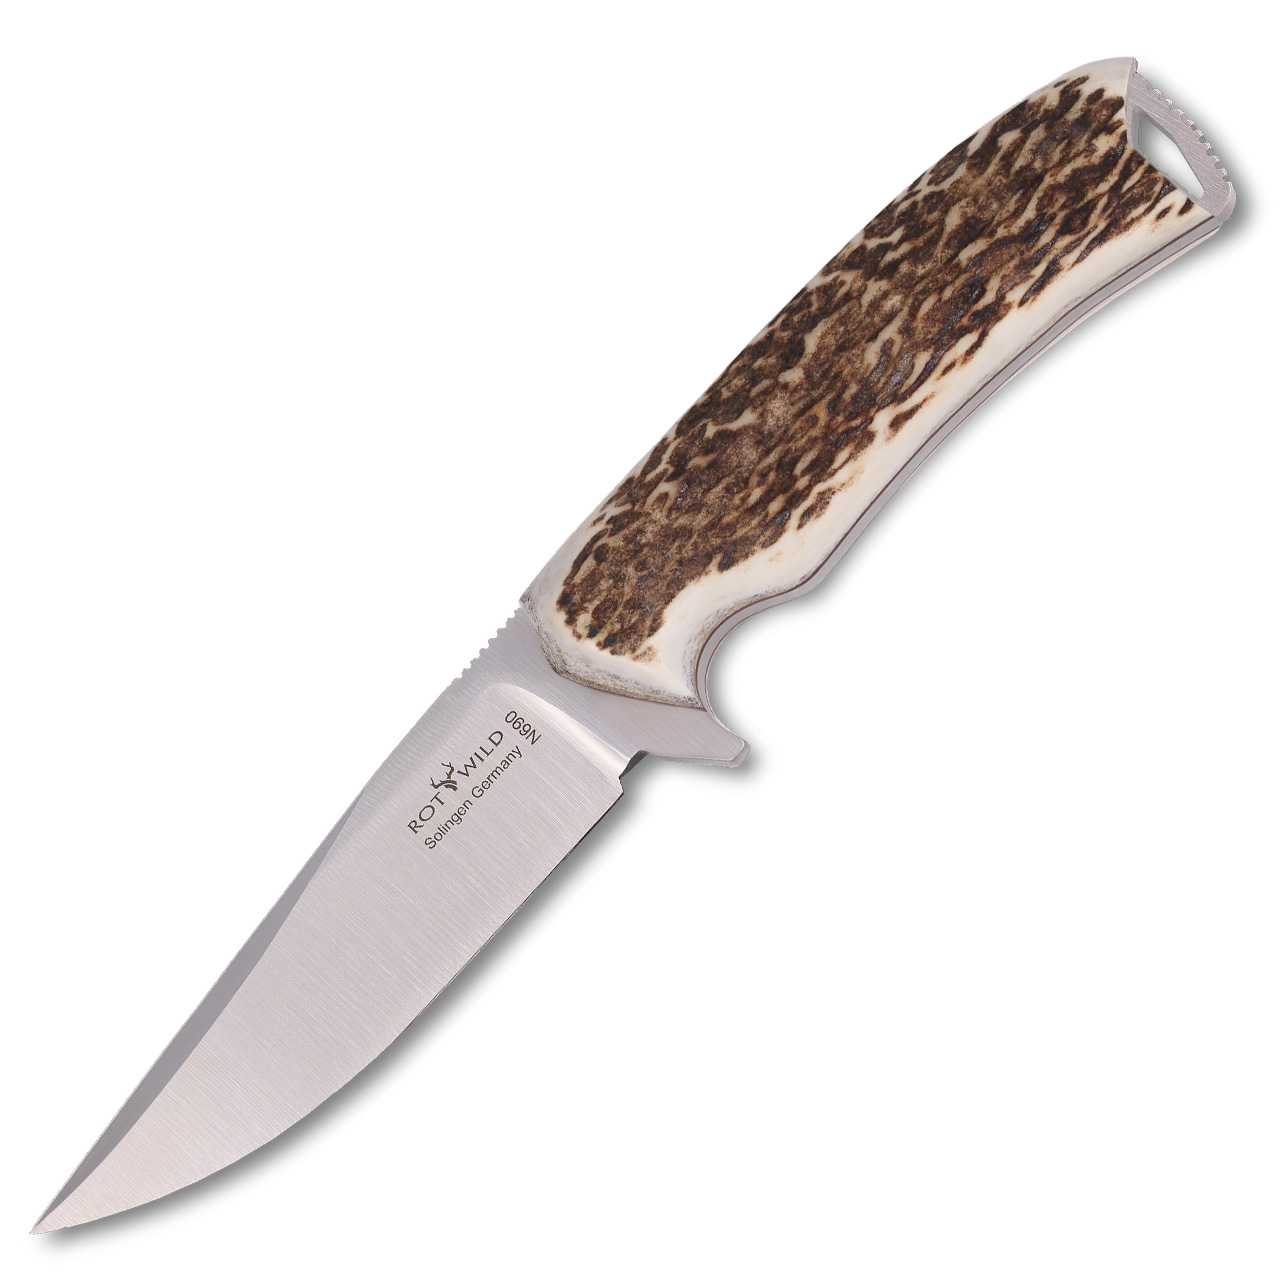 Hunting knife "Habicht" stabilised poplar